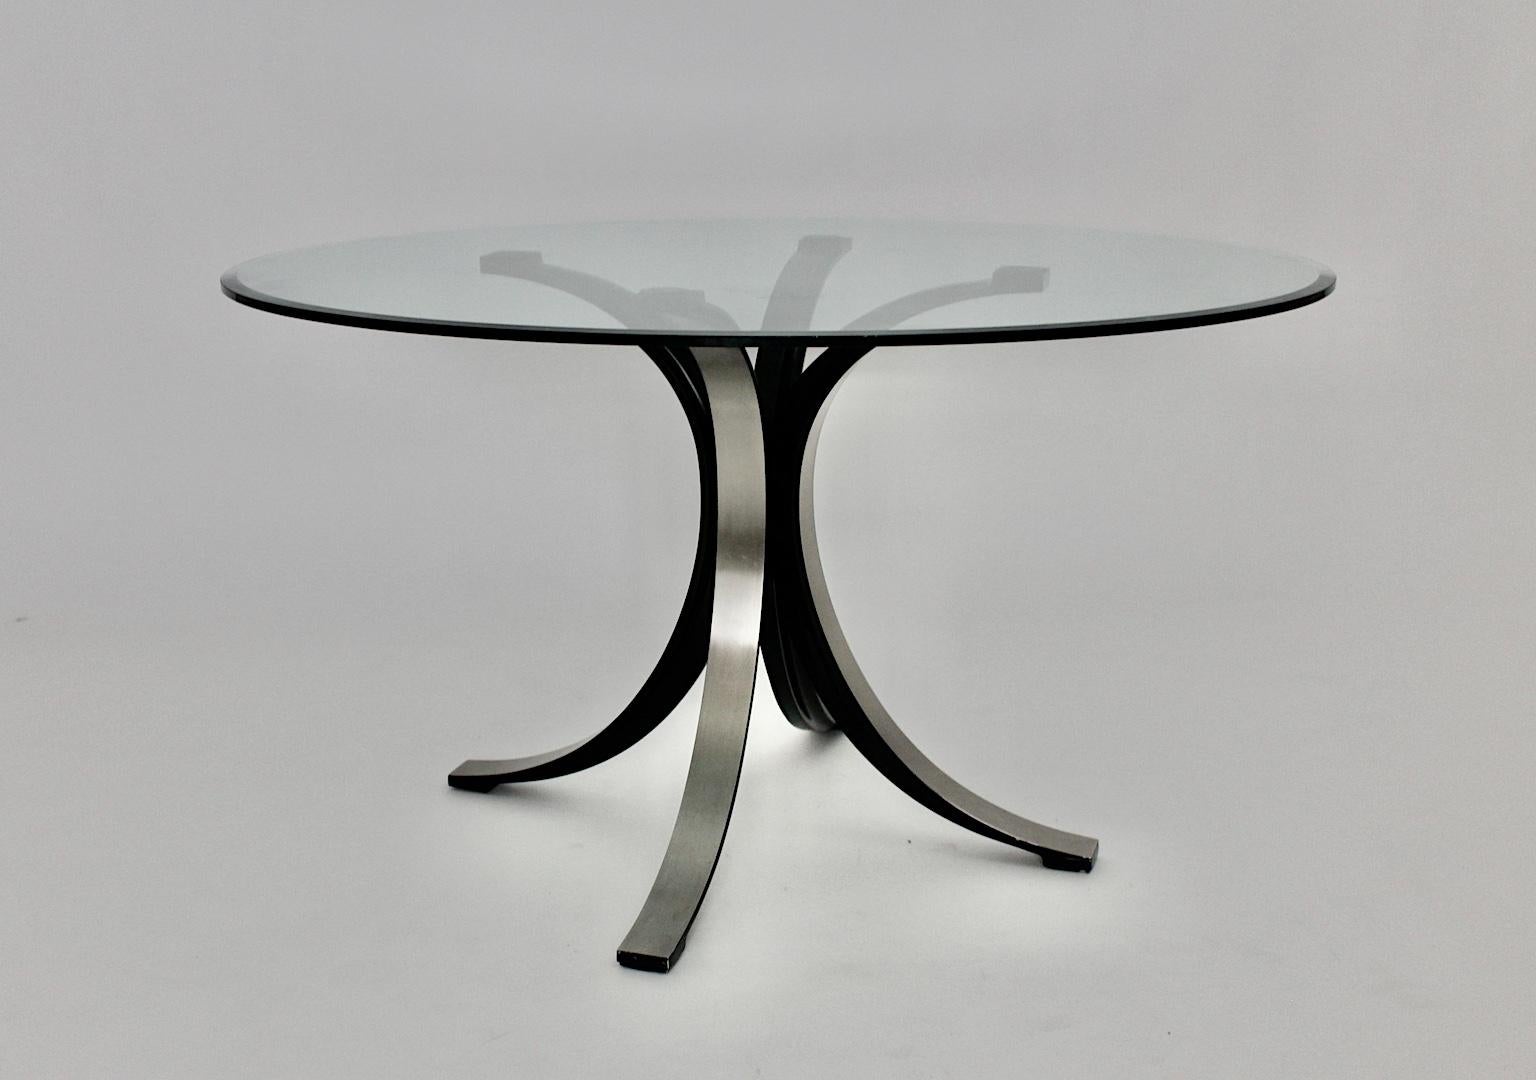 italien Table de salle à manger moderne du milieu du siècle dernier en verre et métal Osvaldo Borsani Tecno, Italie en vente